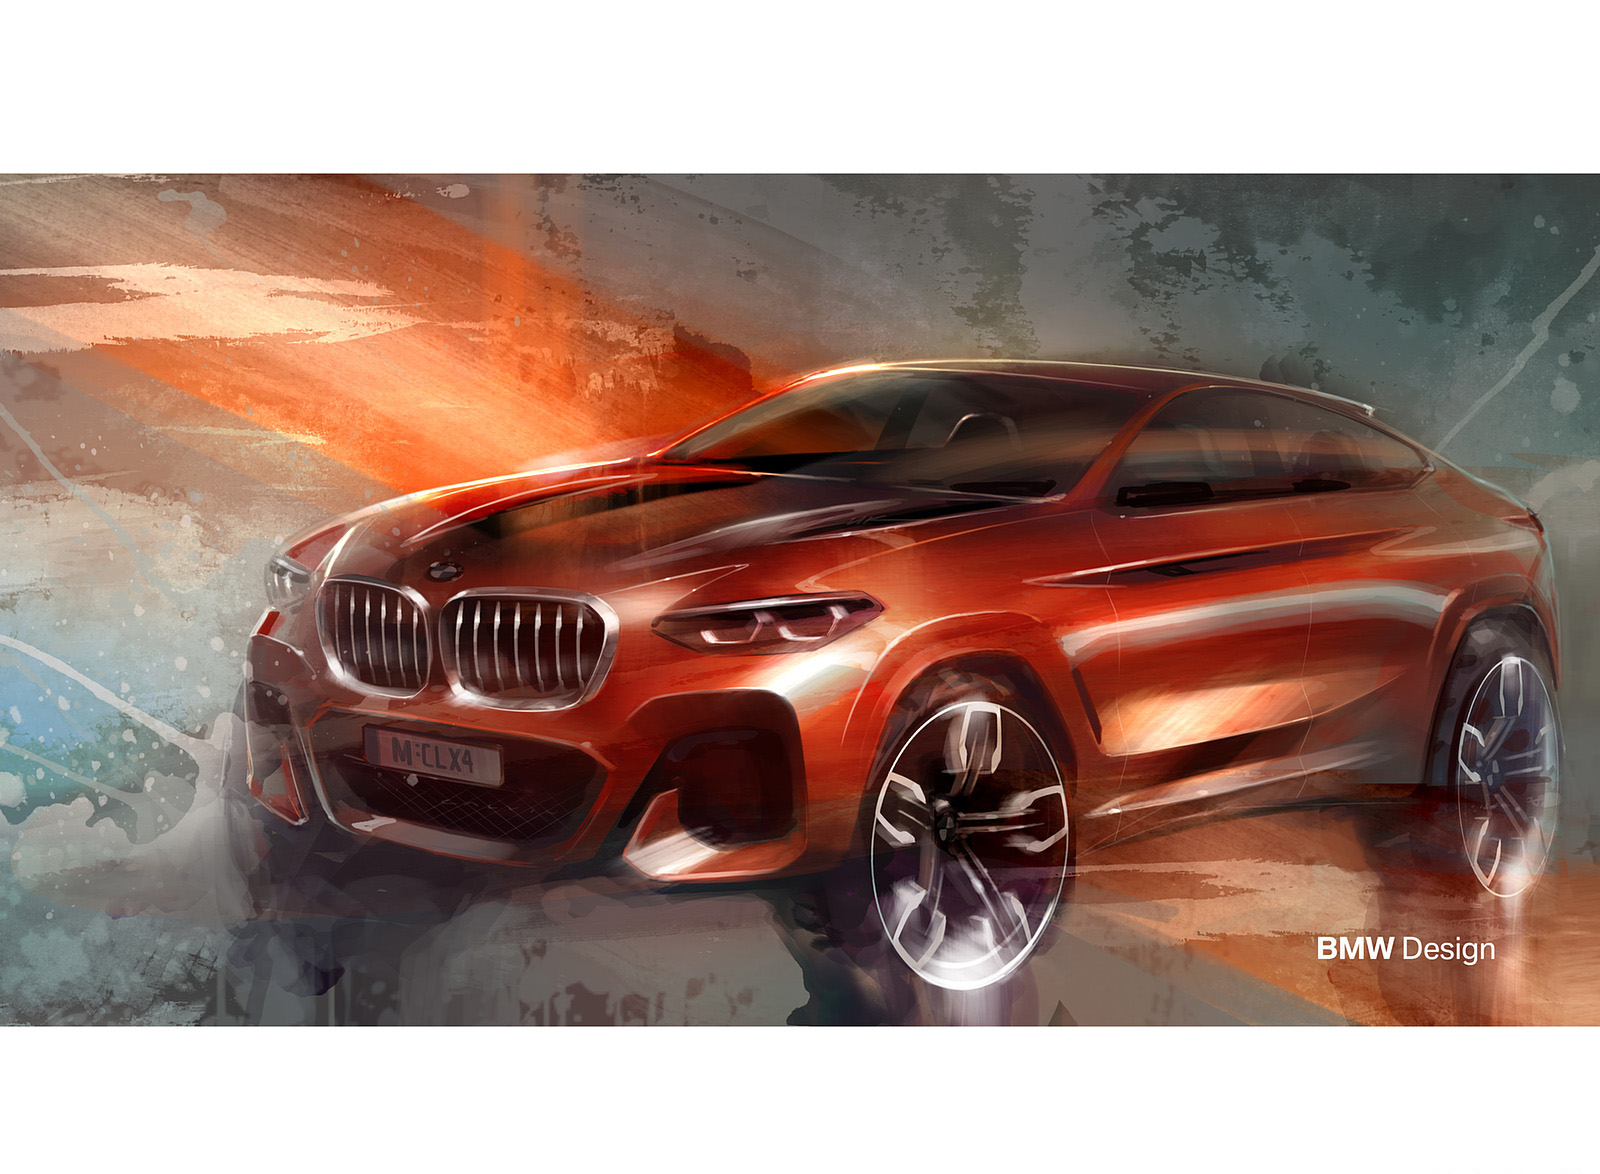 2019 BMW X4 M40d Design Sketch Wallpapers #192 of 202